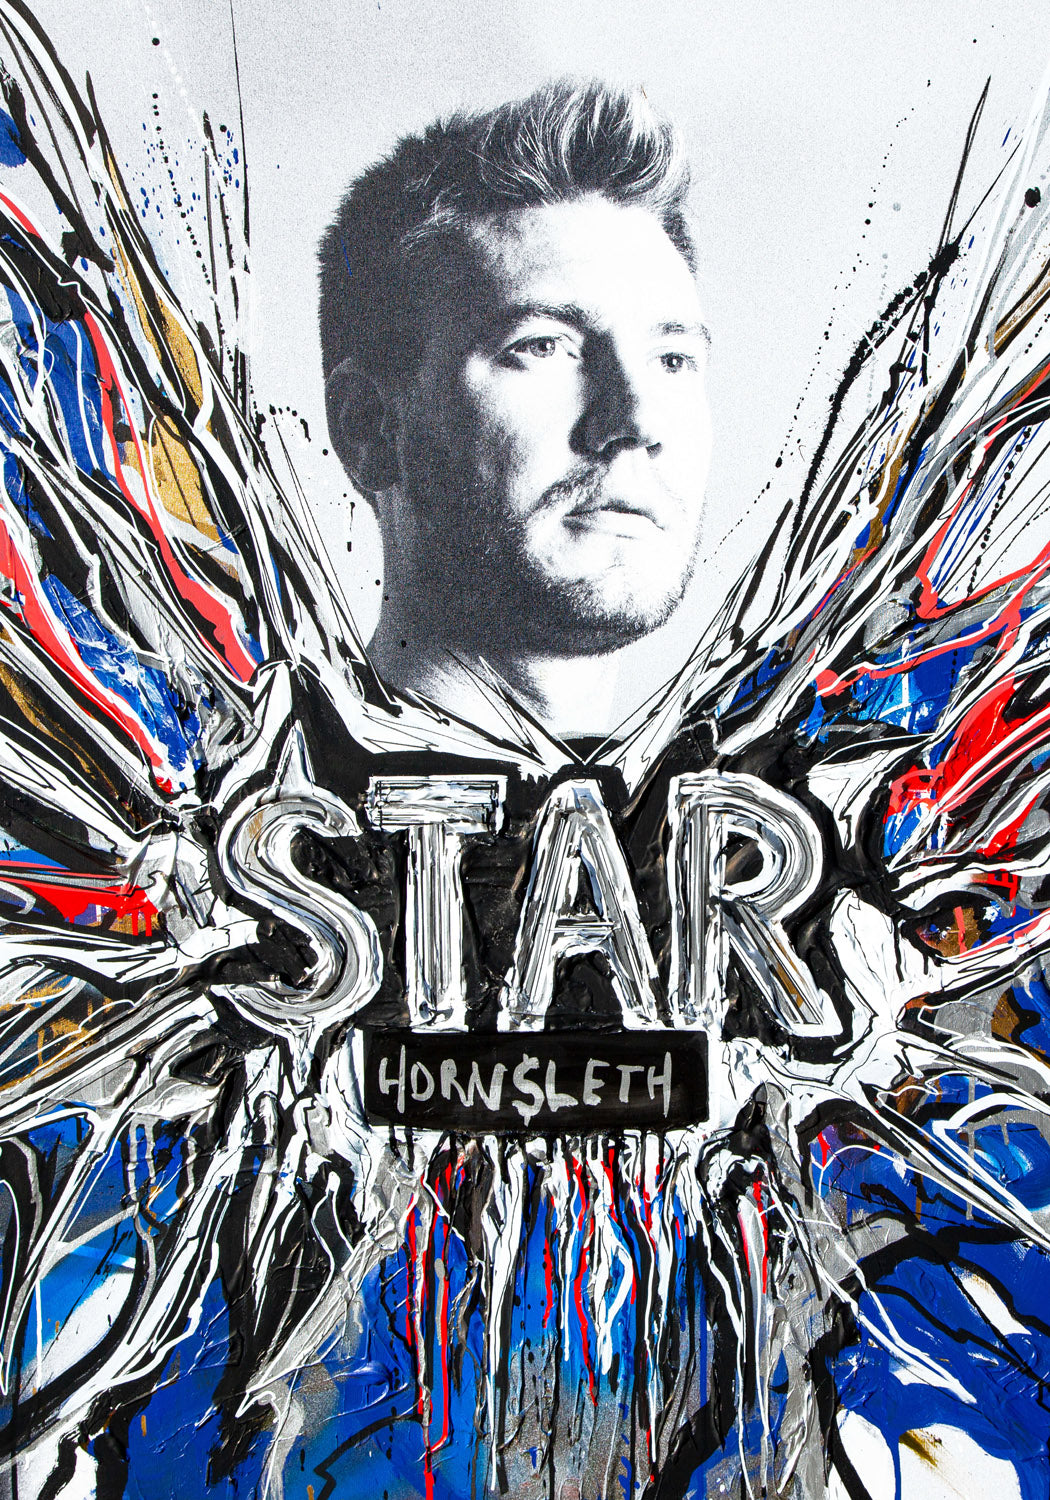 FCK - Star - Poster by Hornsleth